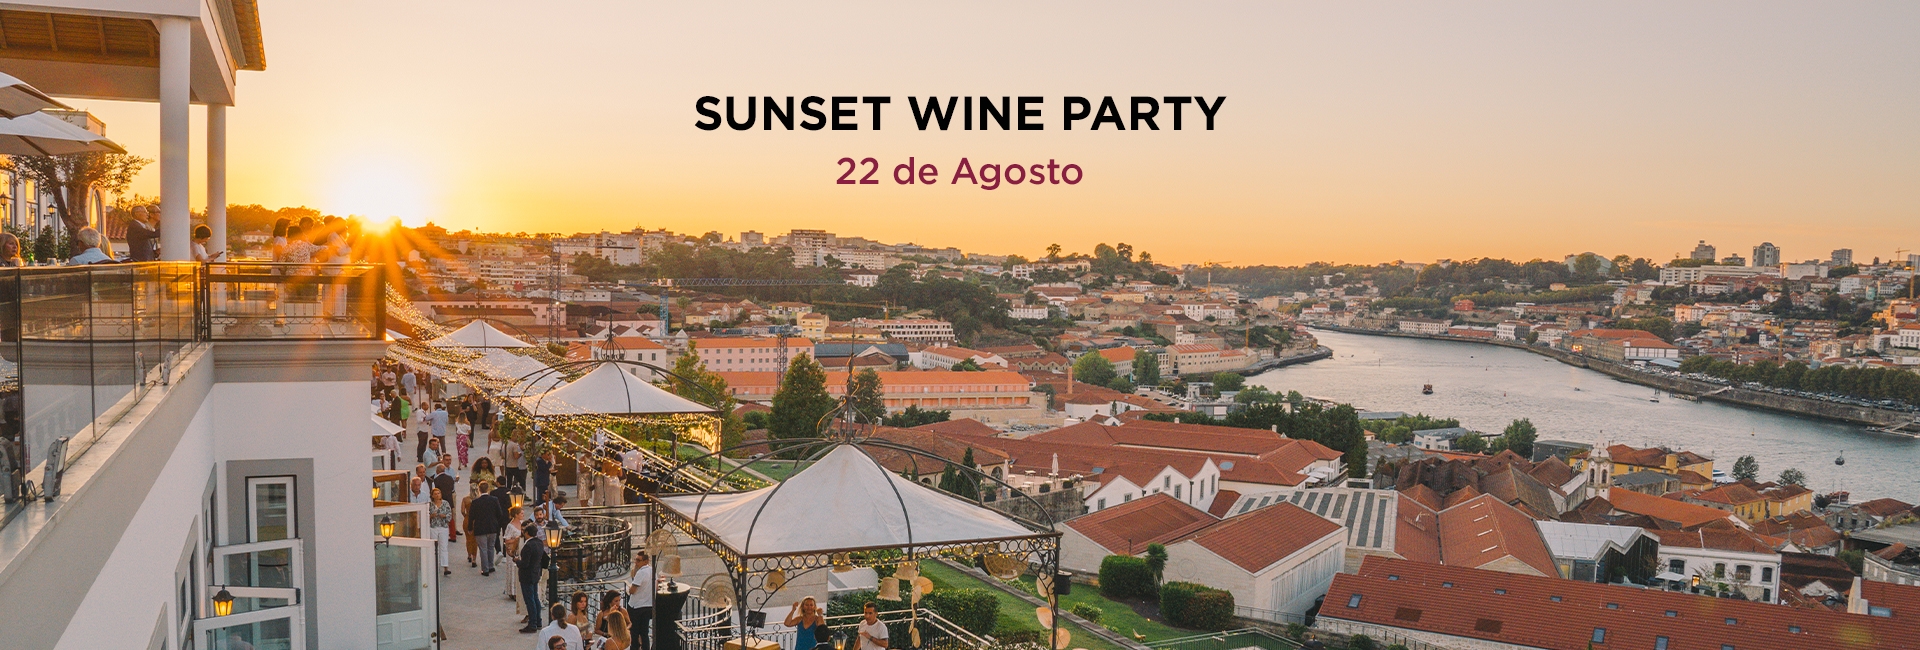 Sunset Wine Party - Agosto